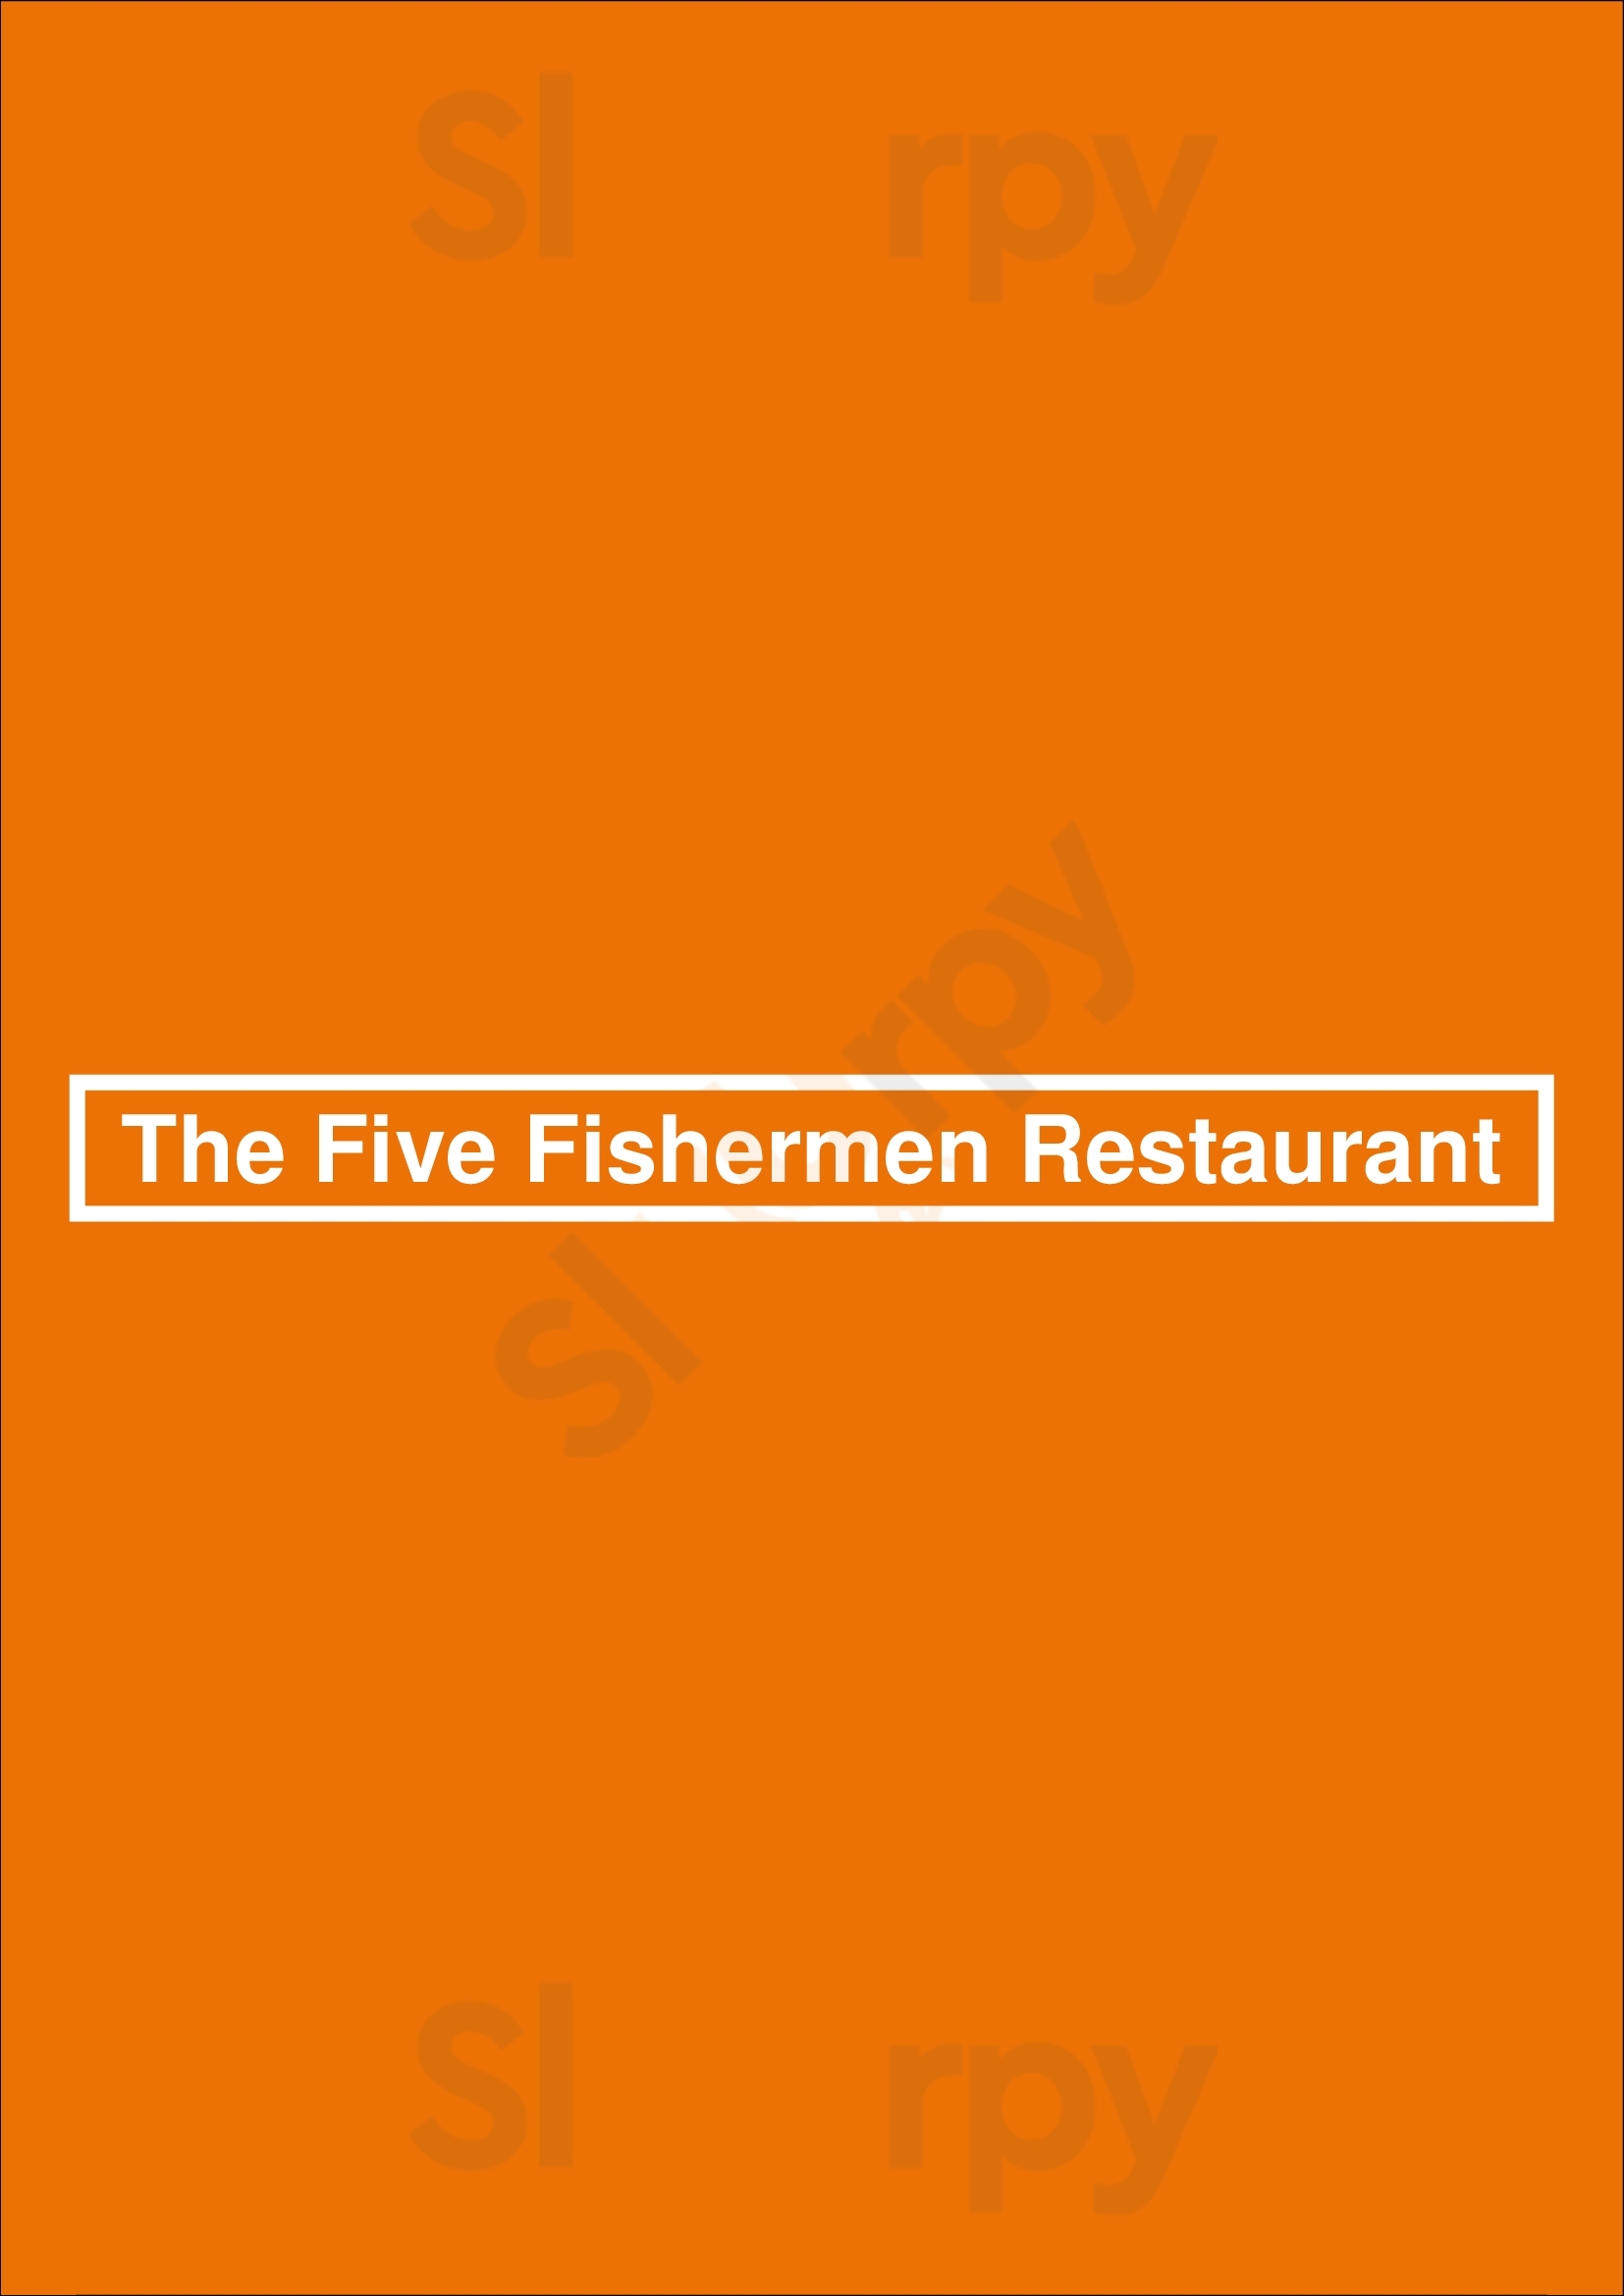 The Five Fishermen Restaurant Halifax Menu - 1